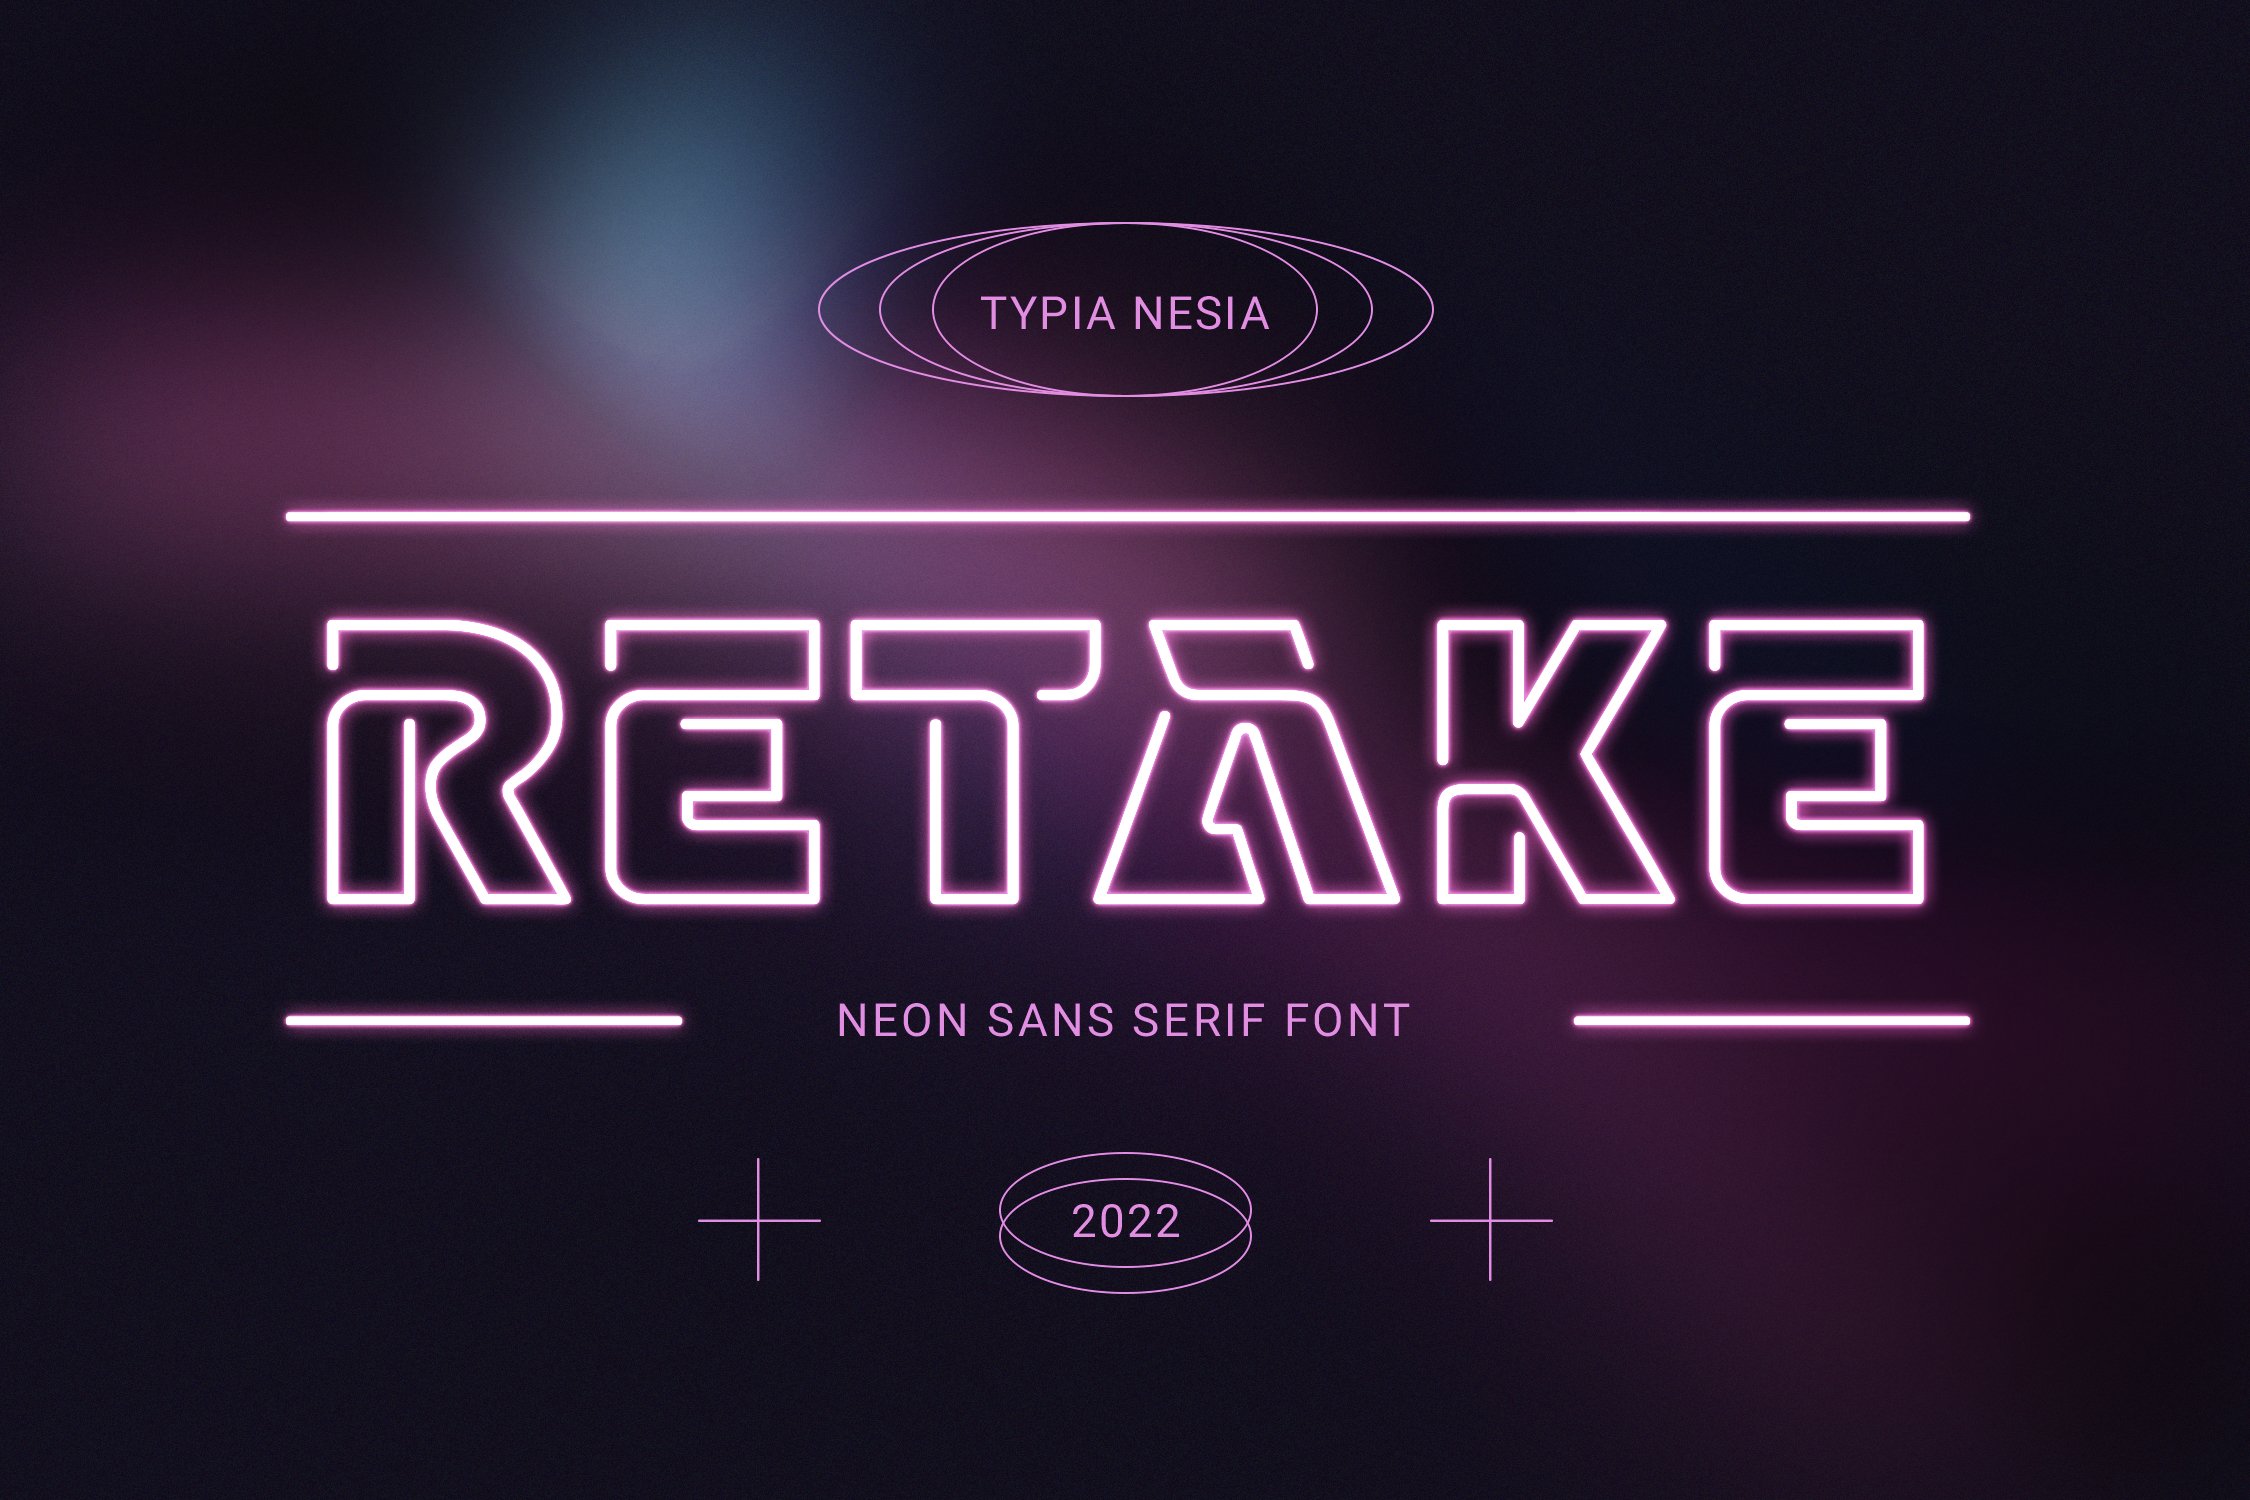 Retake Neon Sans cover image.